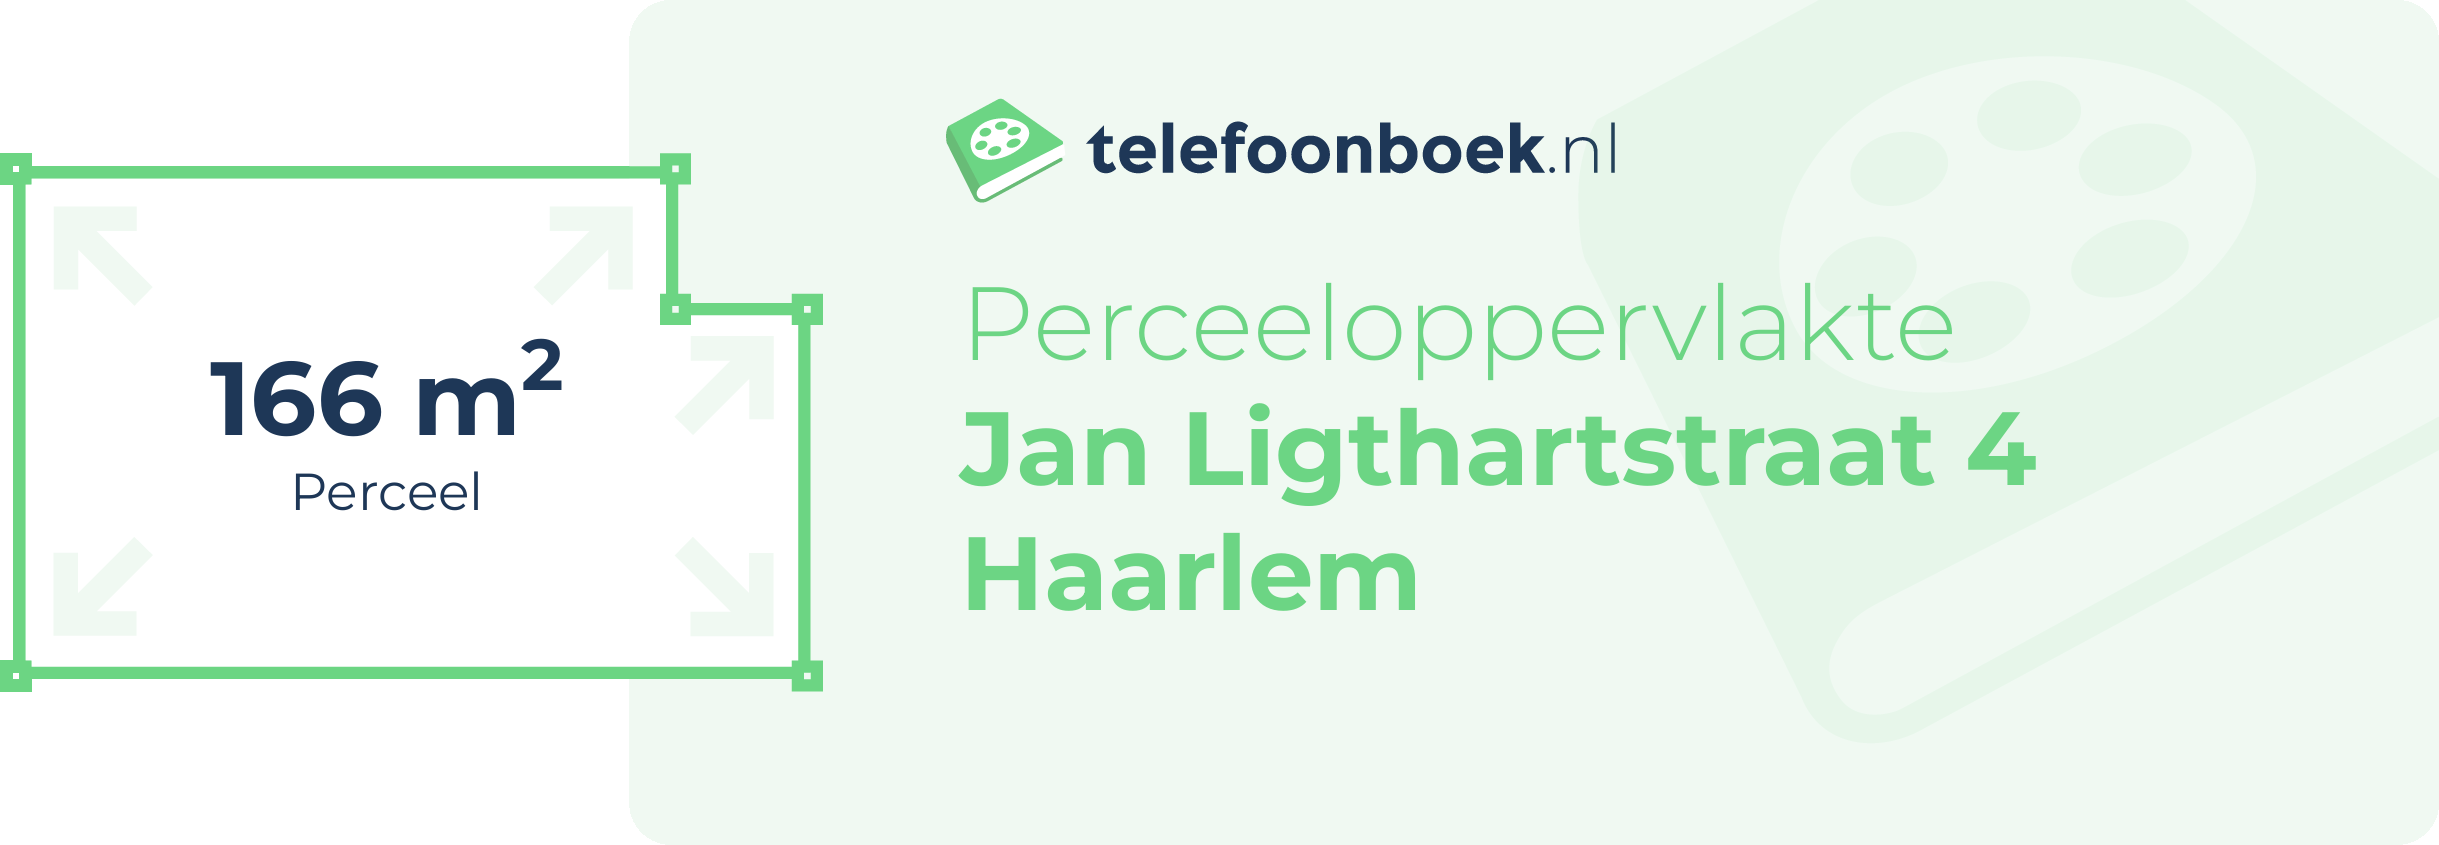 Perceeloppervlakte Jan Ligthartstraat 4 Haarlem